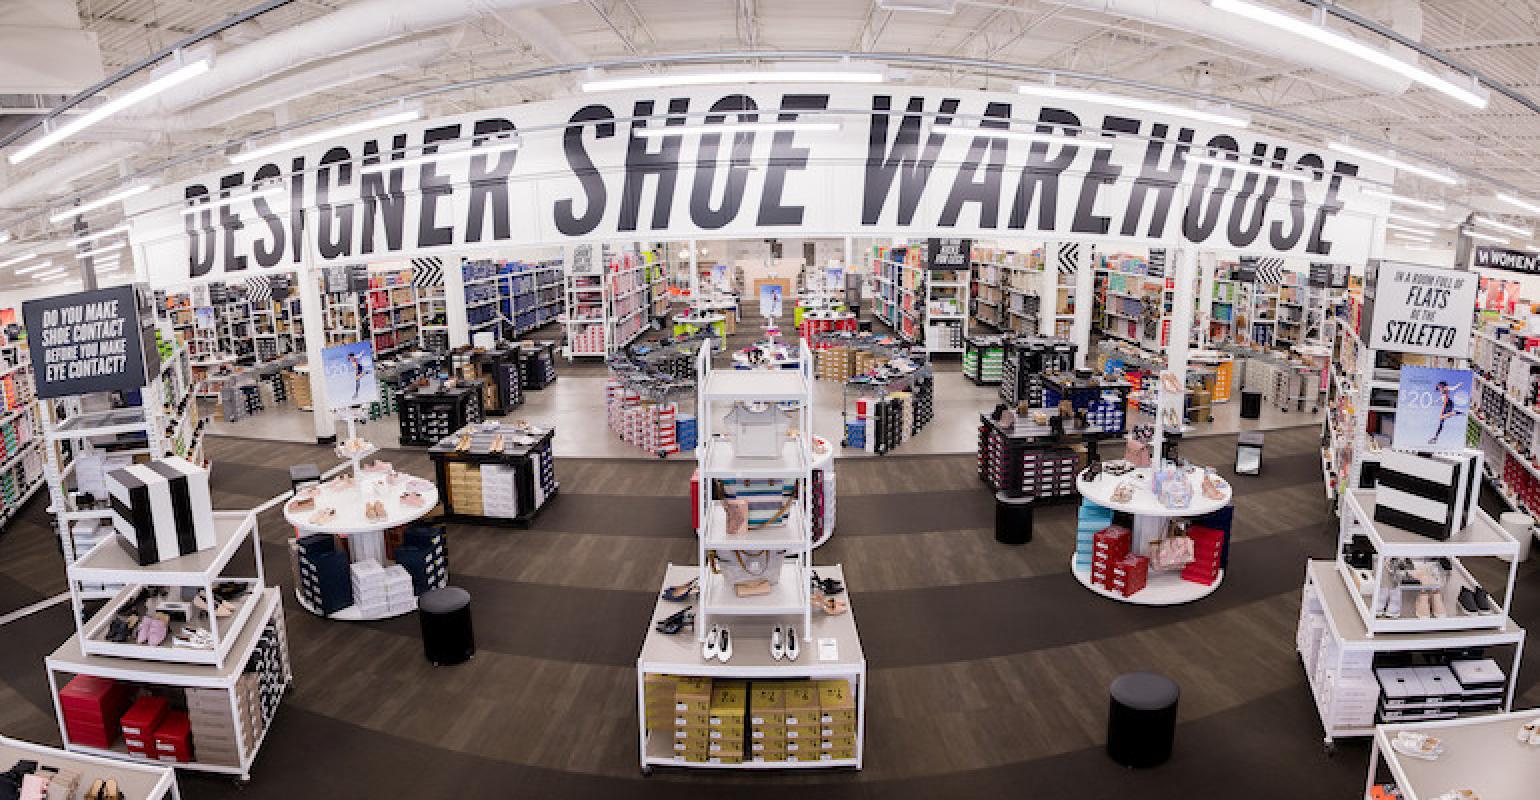 closest designer shoe warehouse